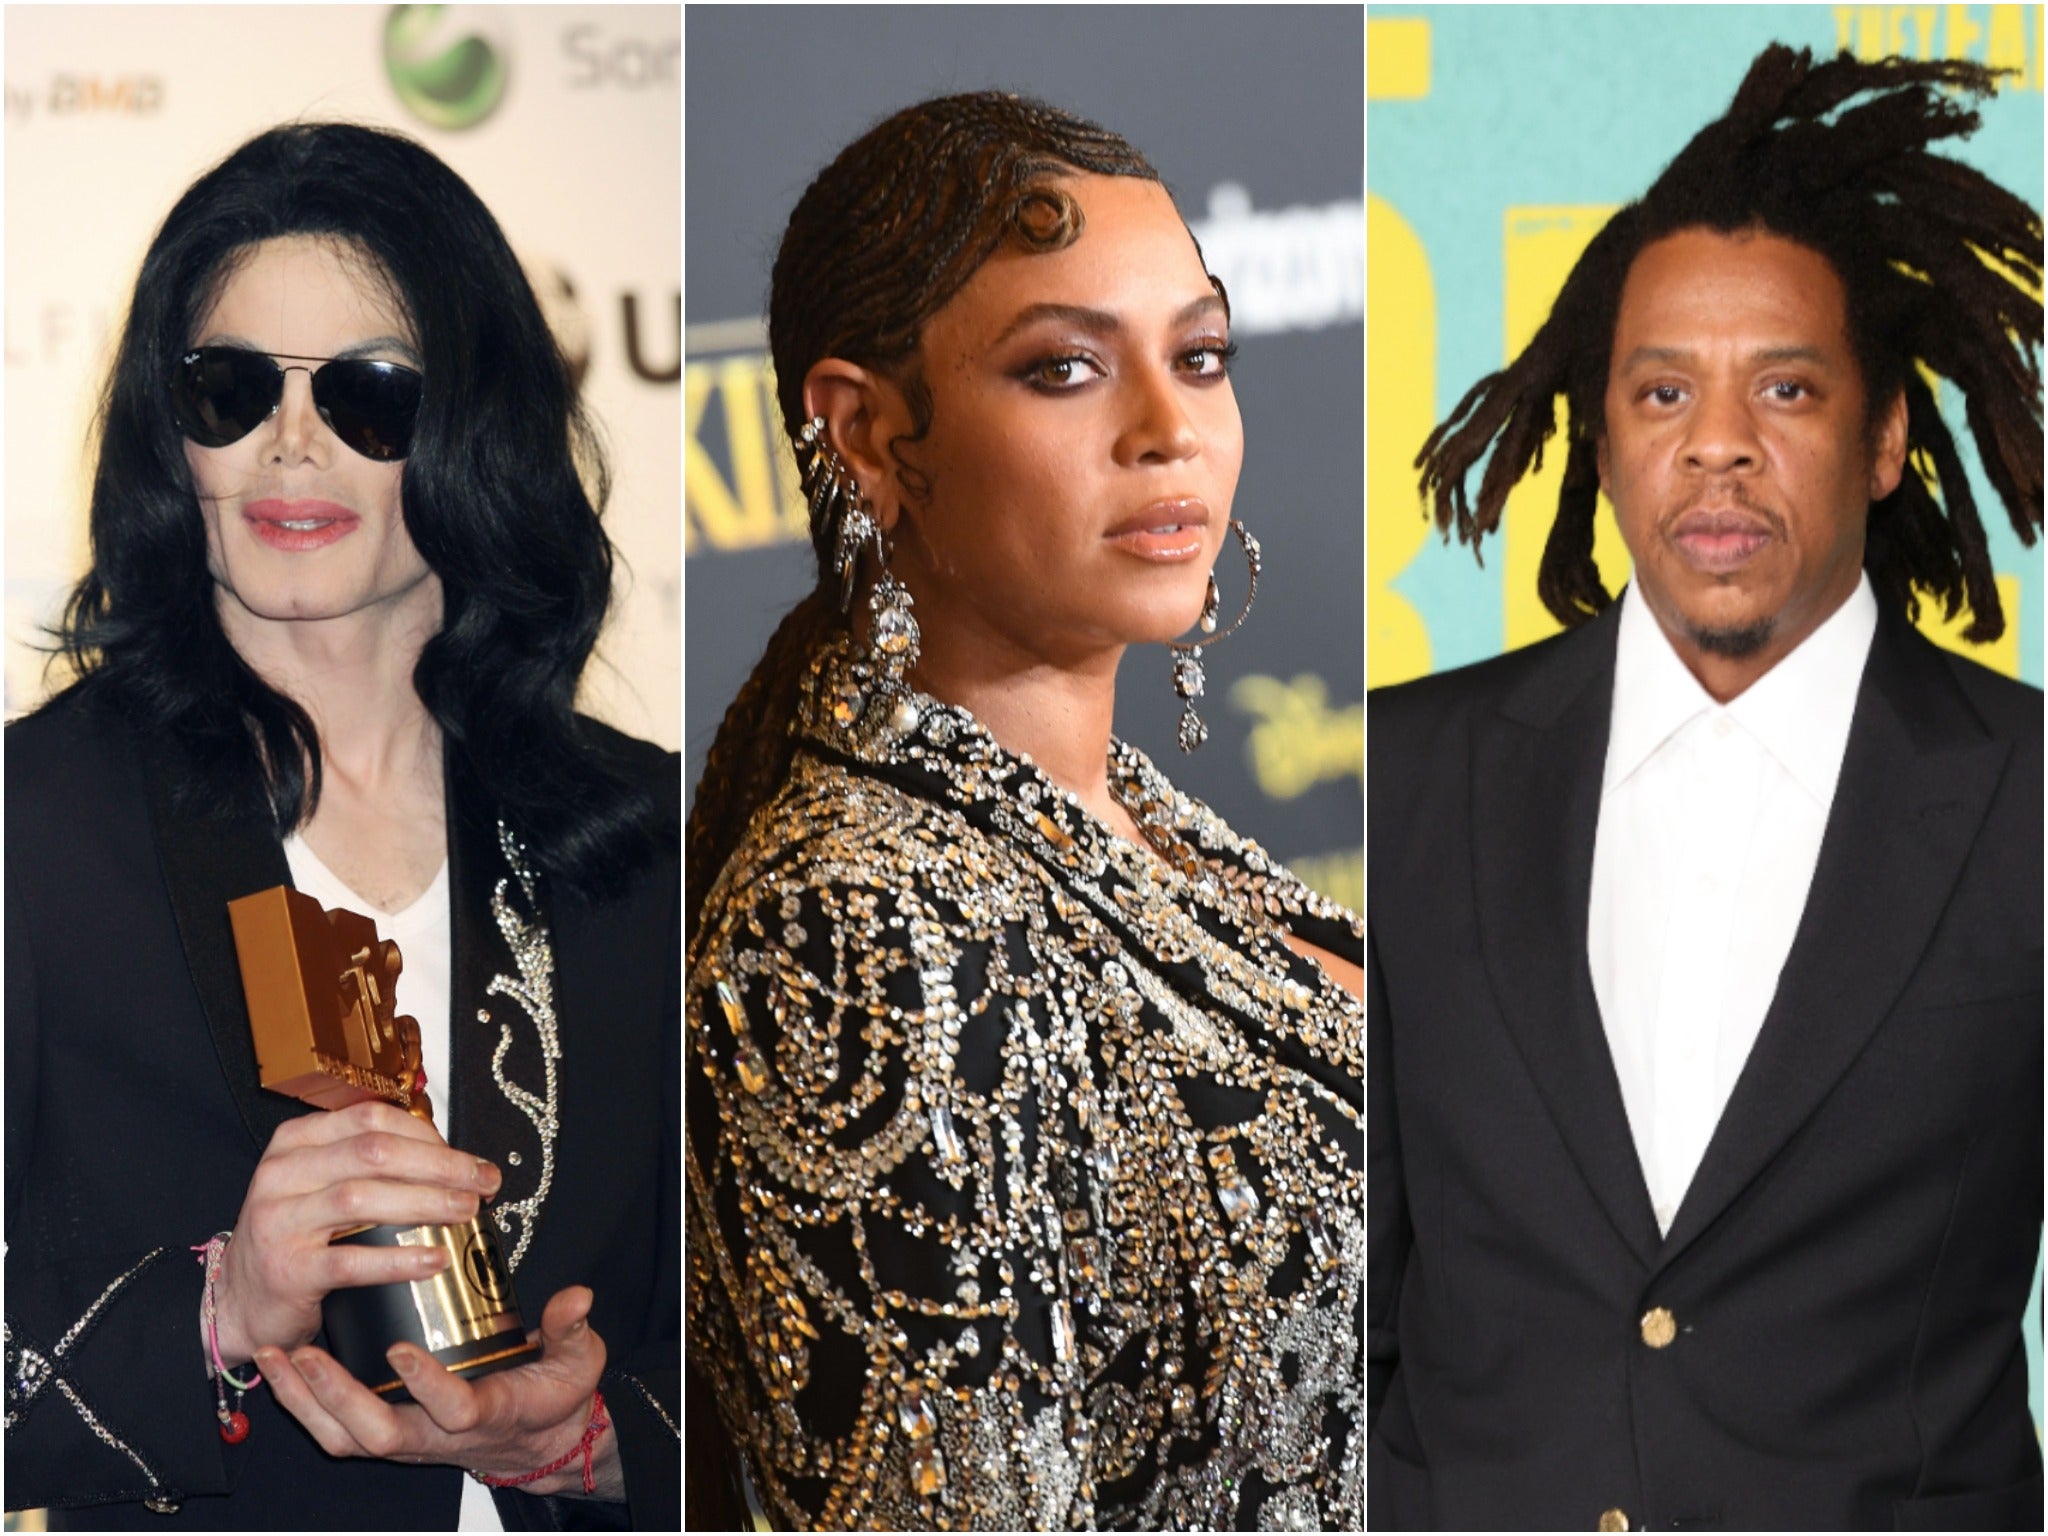 Michael Jackson, Beyonce and Jay-Z